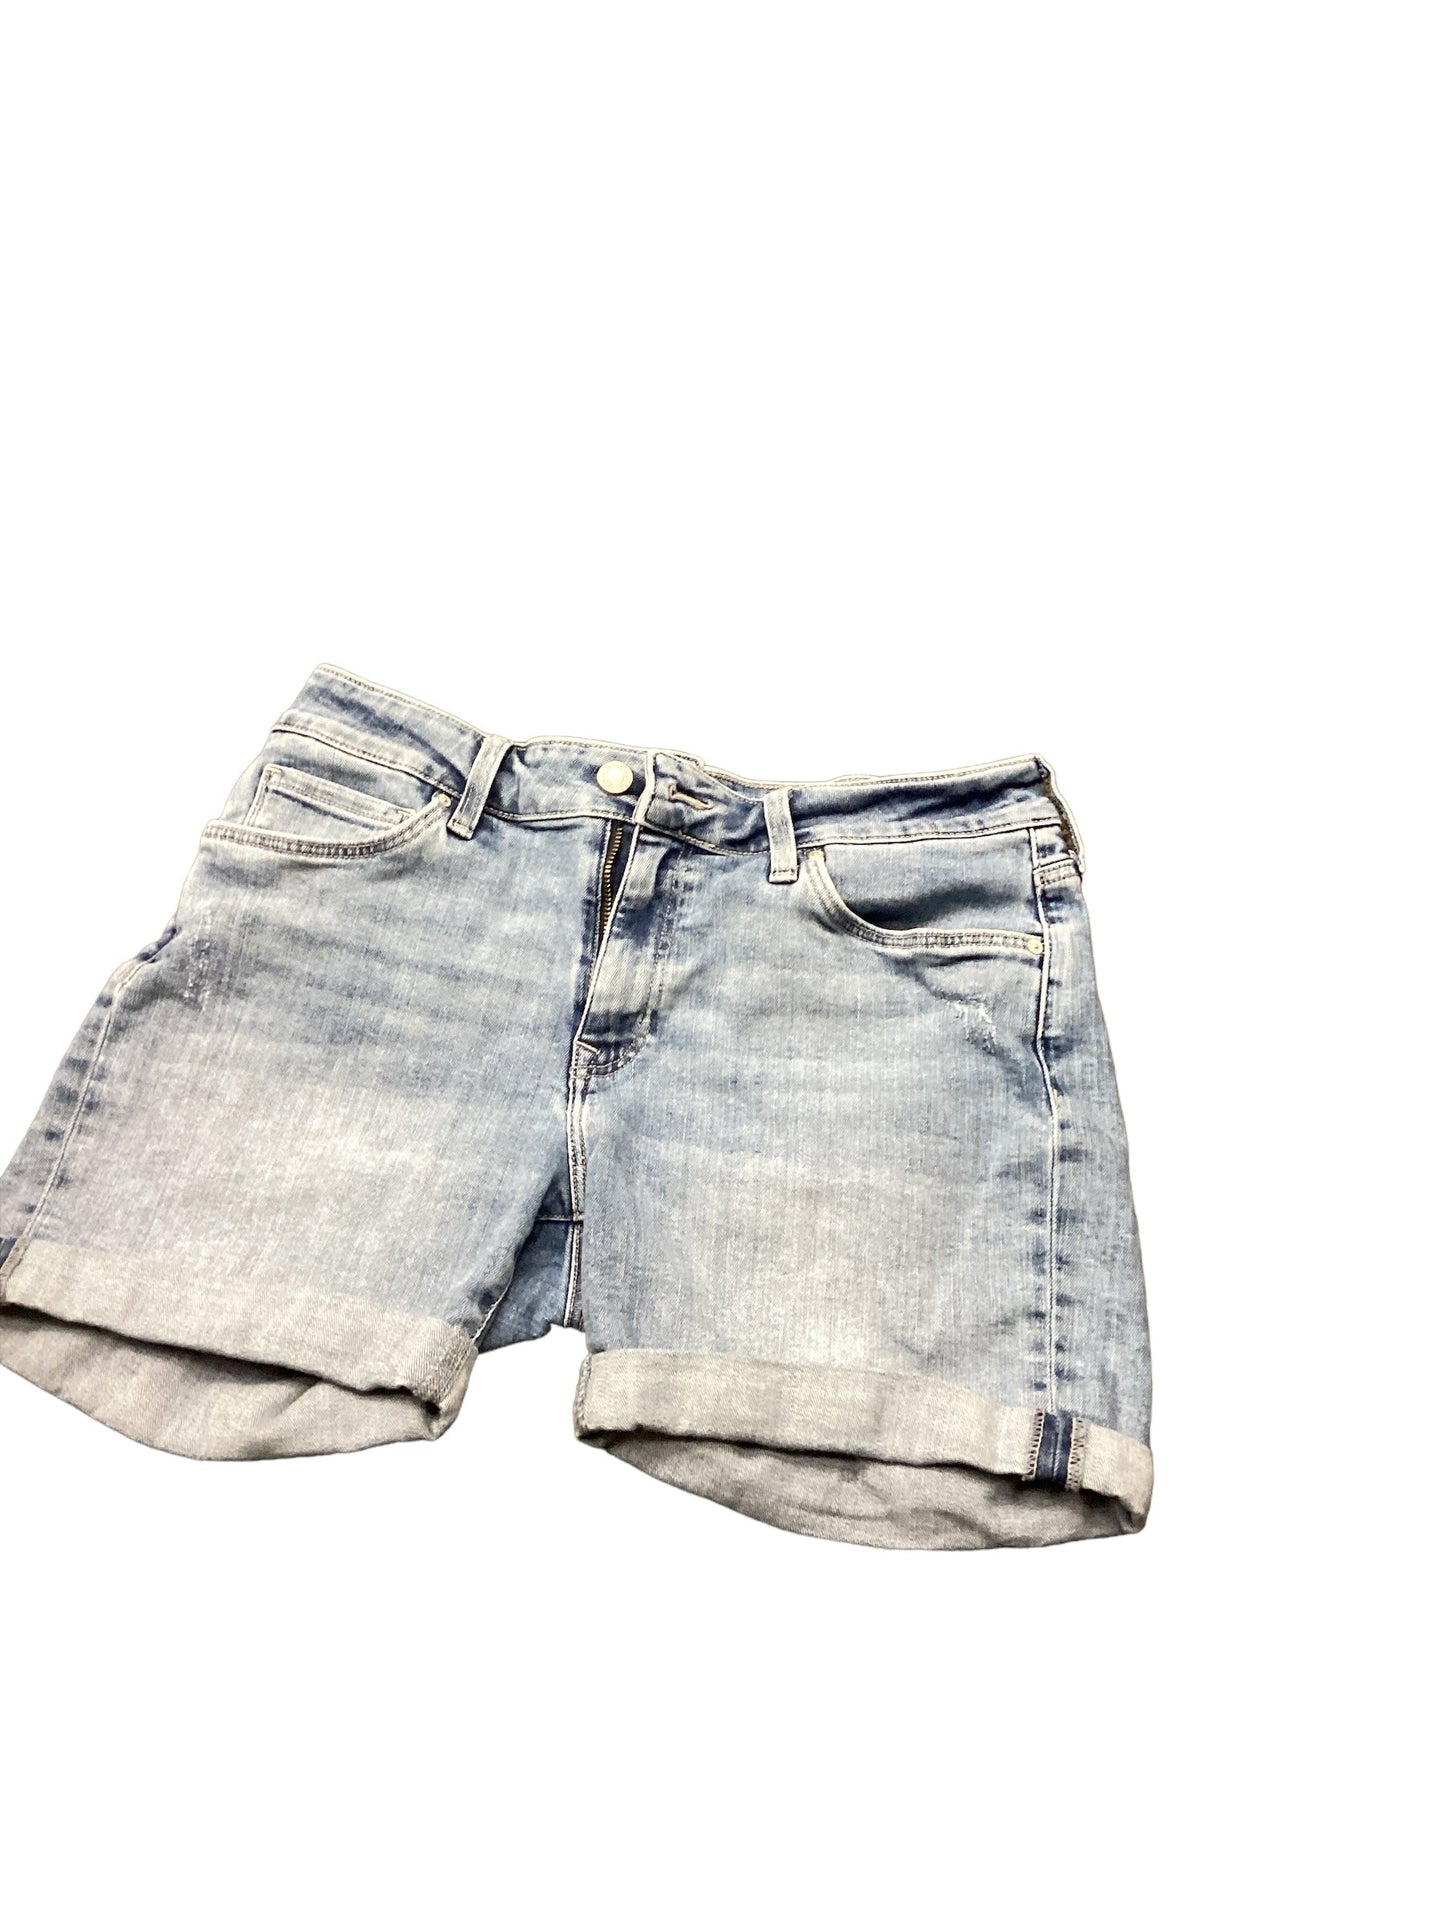 Shorts By Mavi  Size: 8